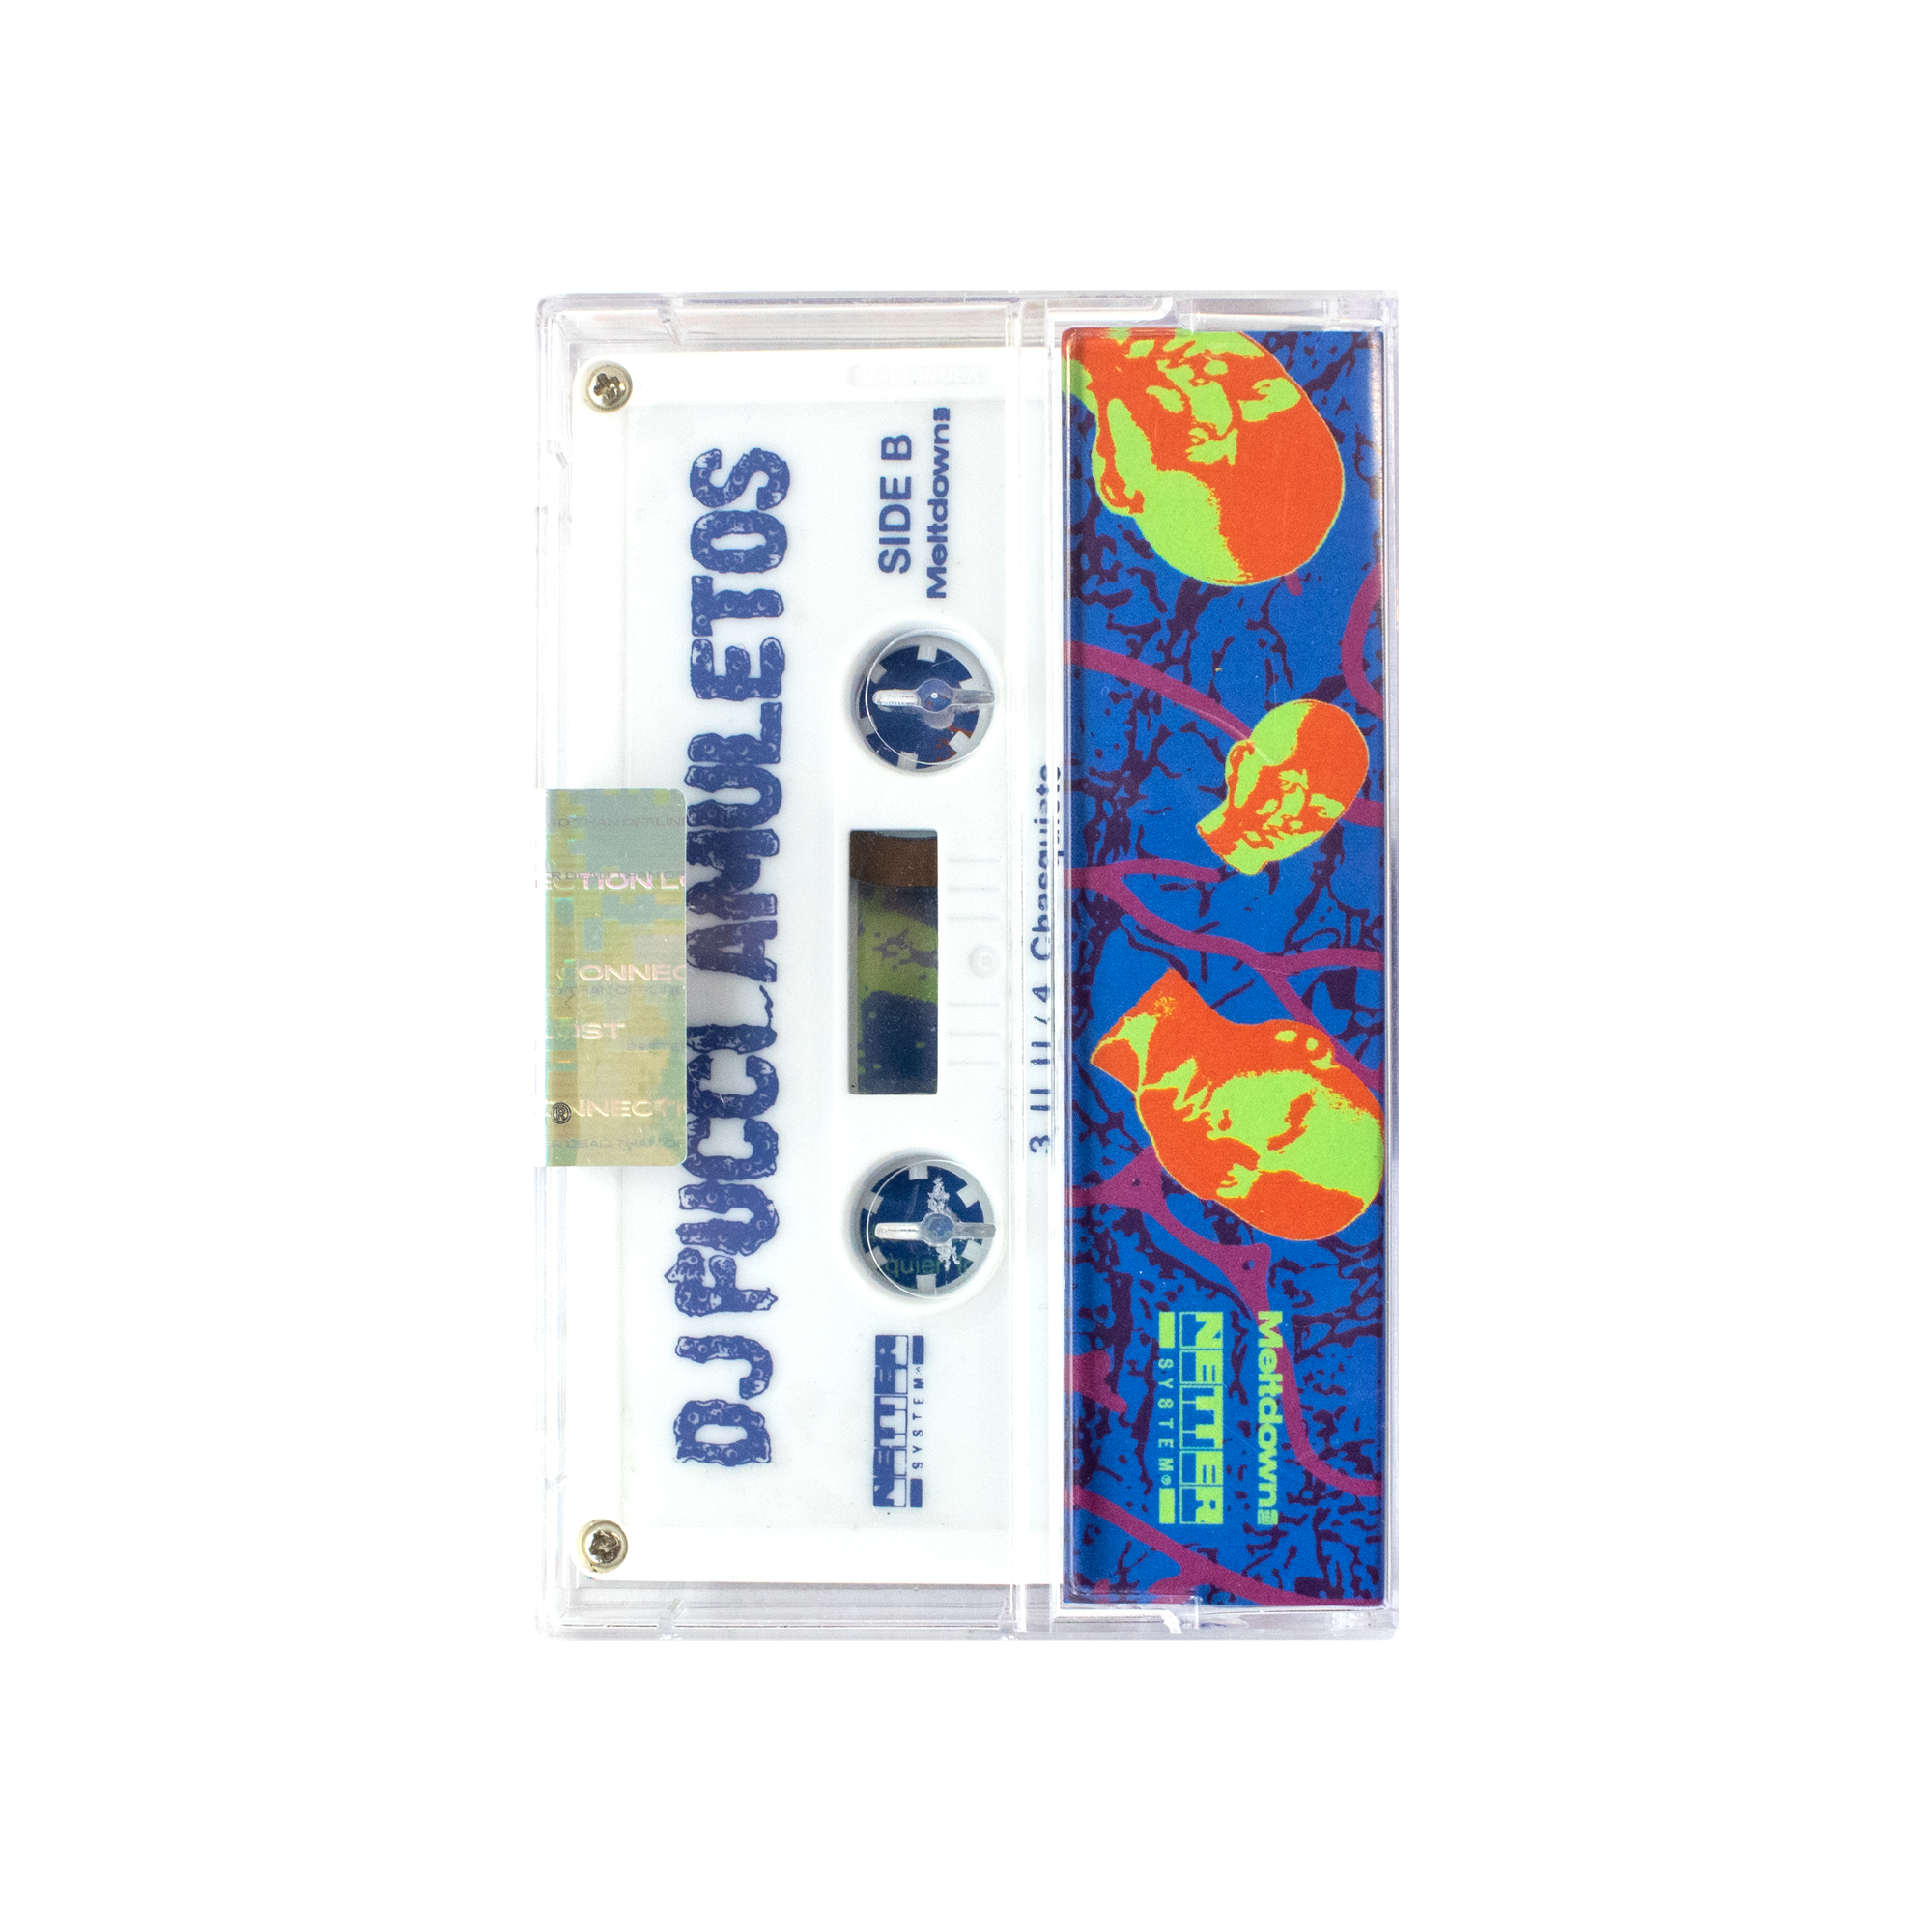 Netter System 003 - DJ Fucci Cassette Tape